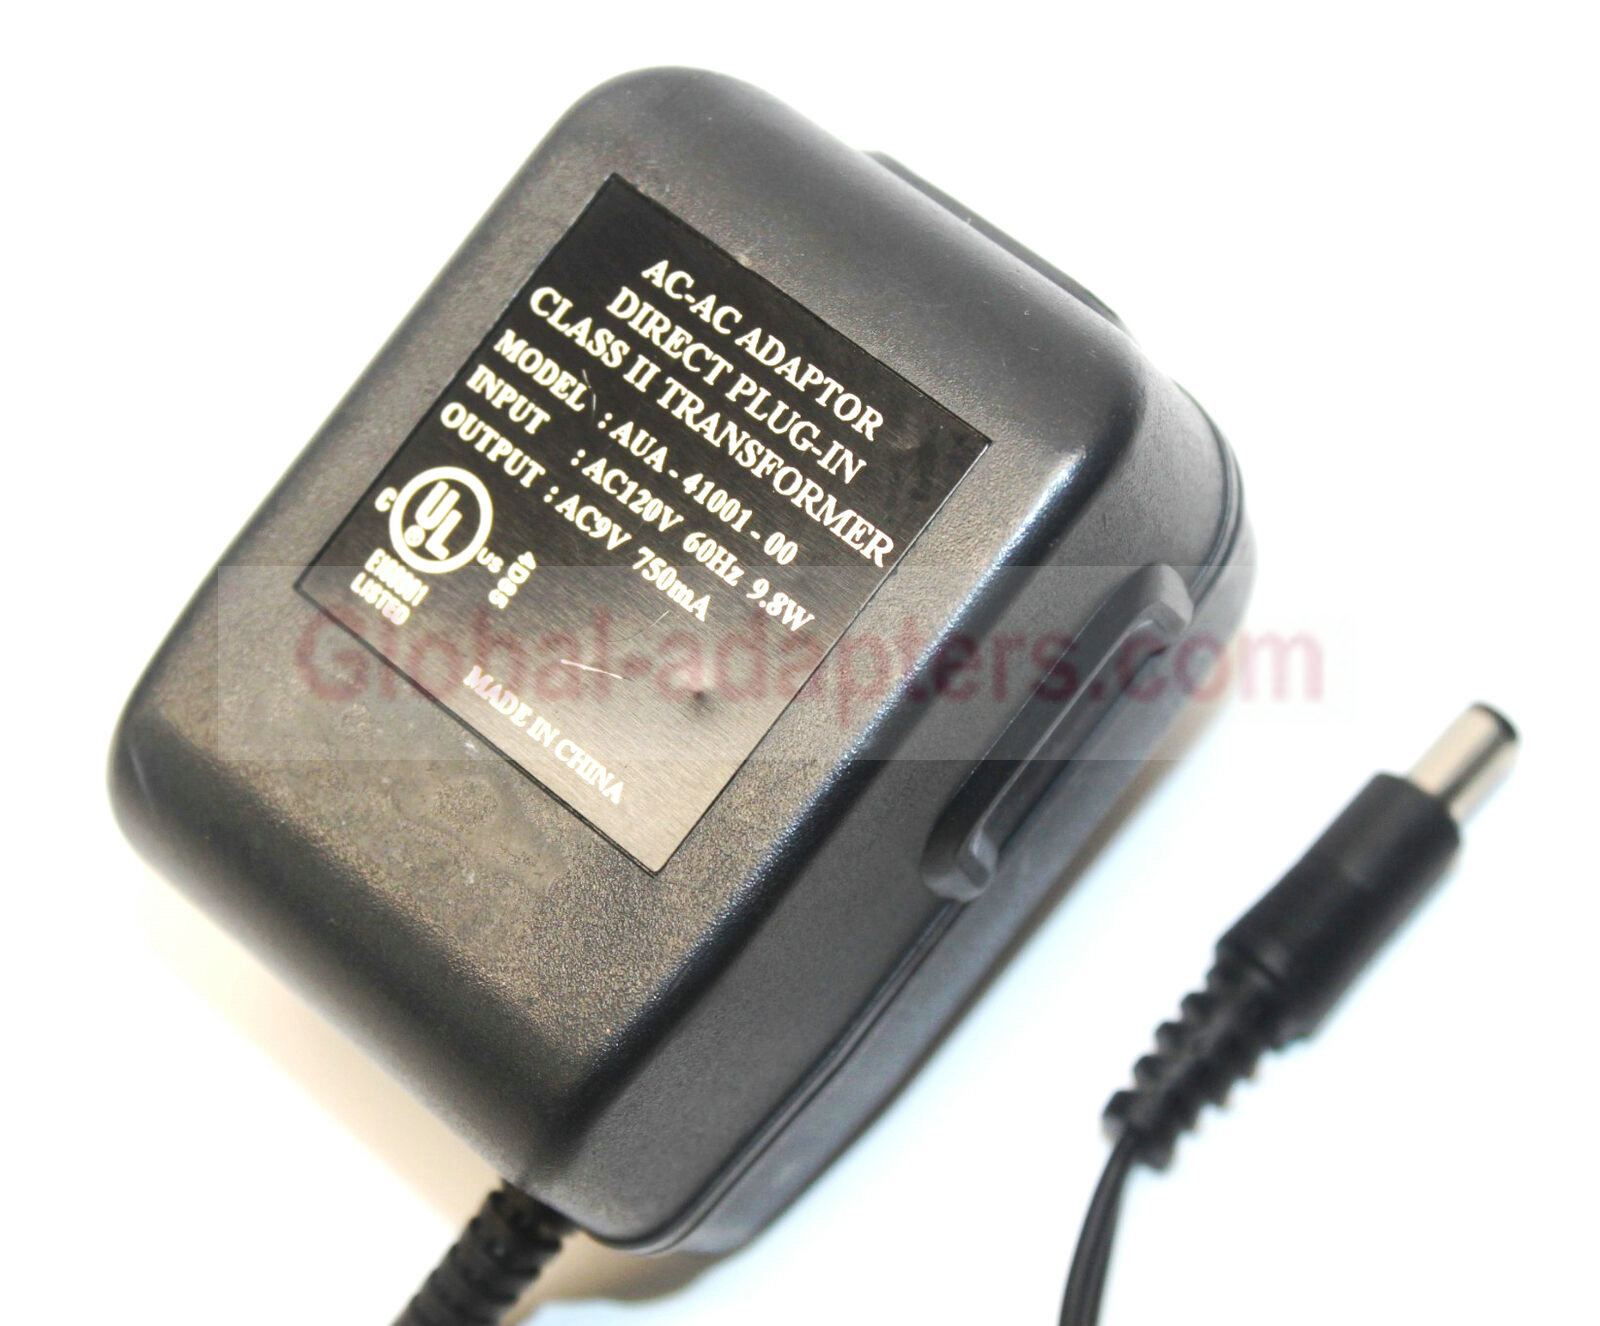 New 9V 750mA AUA-41001-00 Plug-In Class 2 Transformer Power Supply Ac Adapter